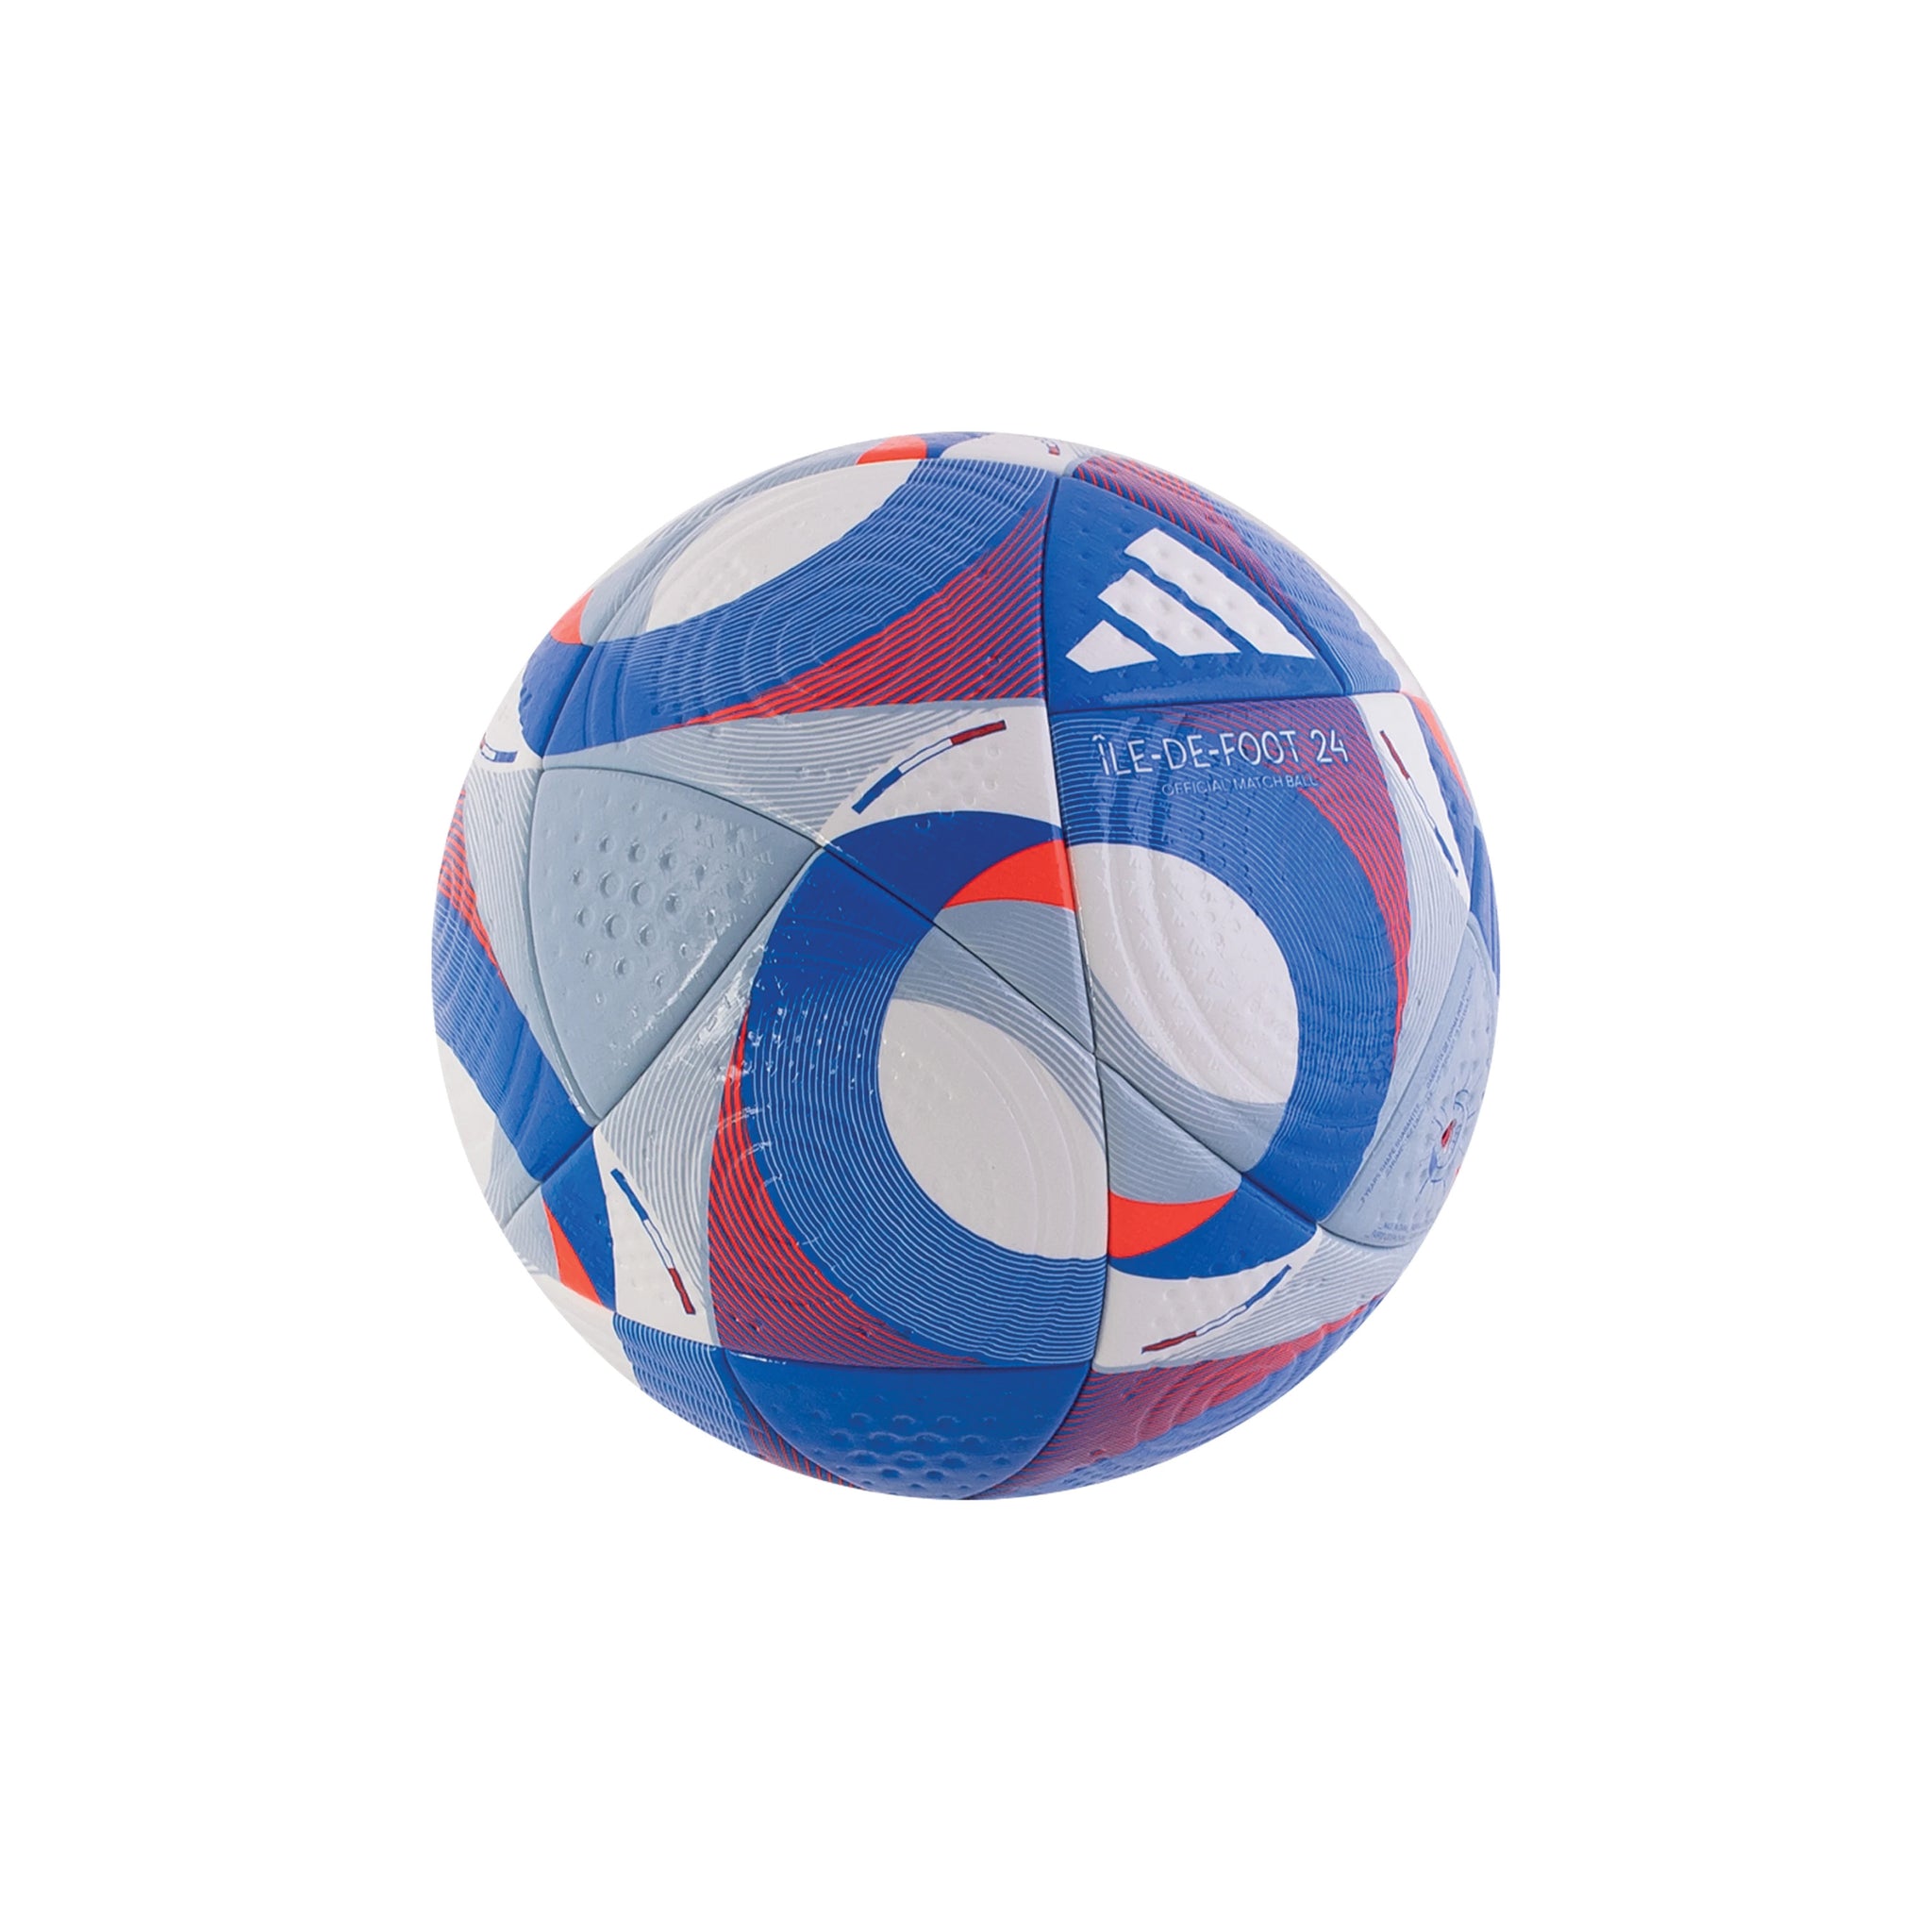 ADIDAS Olympics 2024 Official Match Ball